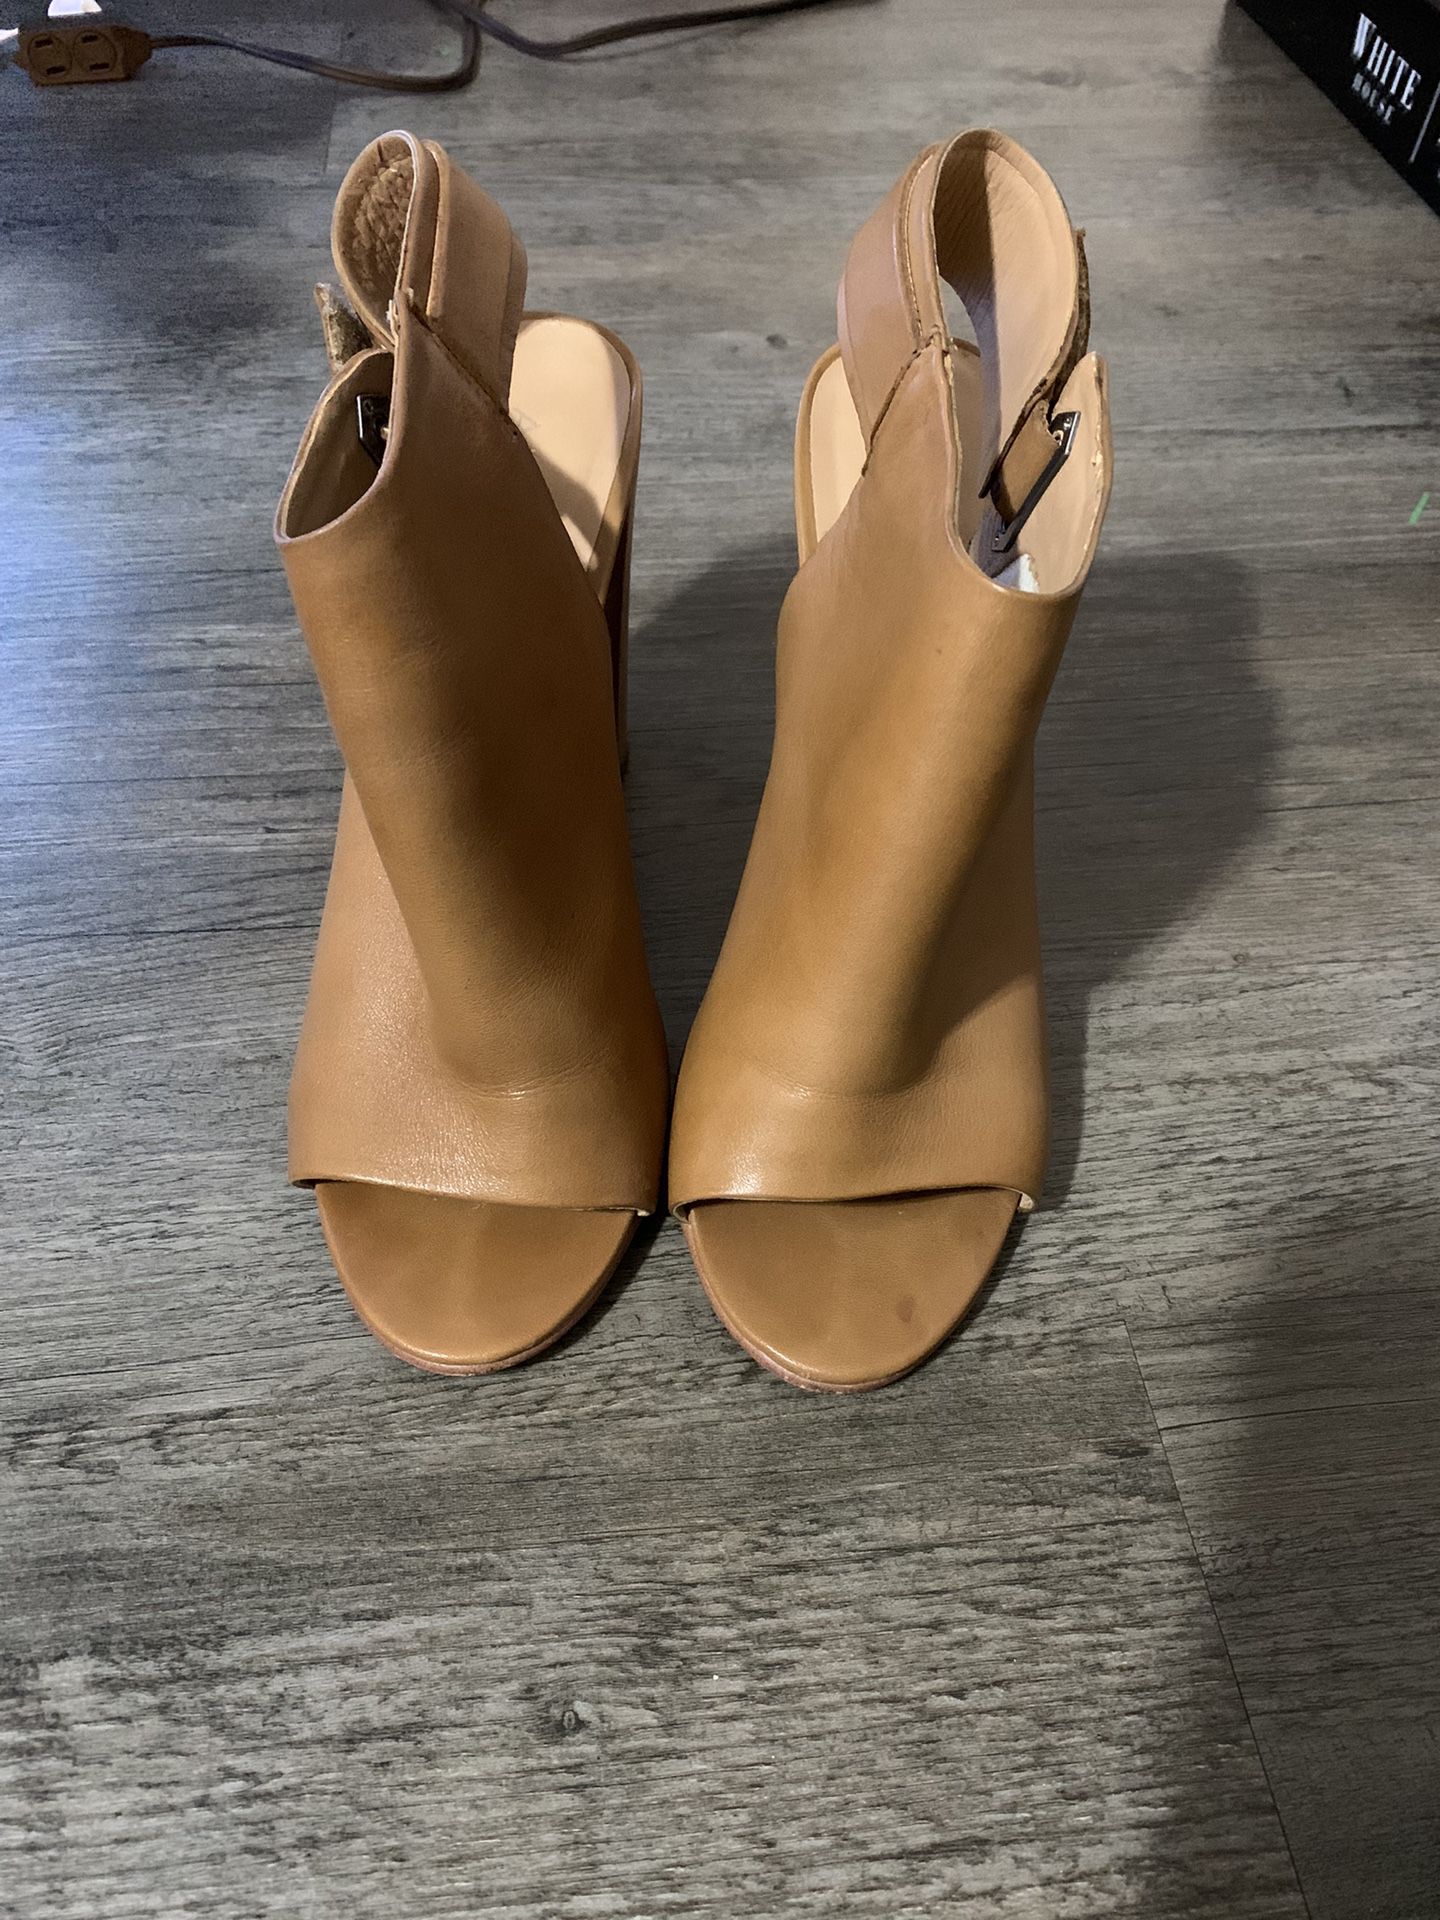 Size 9-10 Women’s Heels 